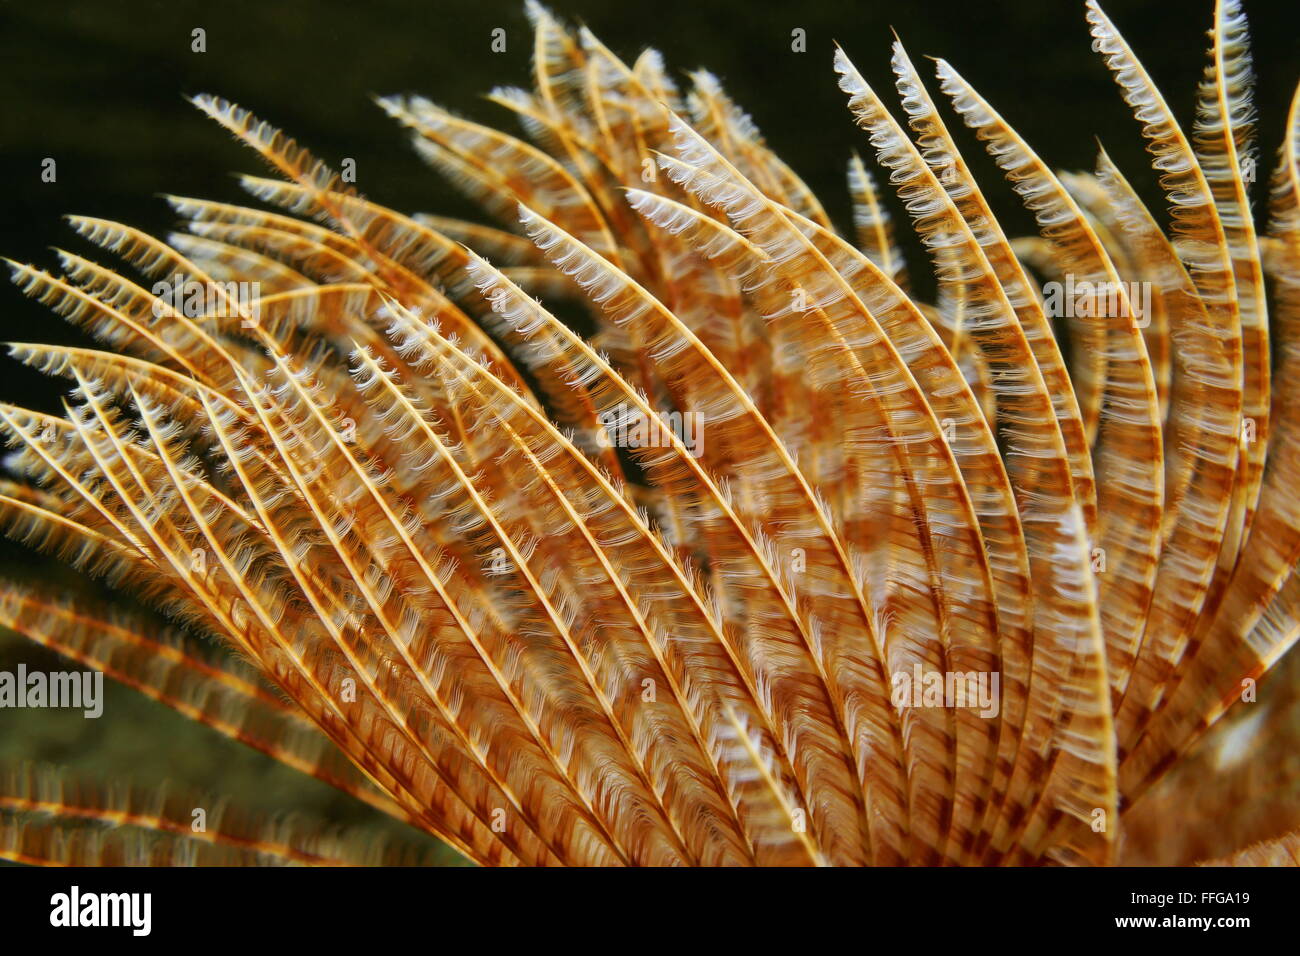 Close-up of radioles of marine worm Sabellastarte magnifica, Caribbean sea Stock Photo